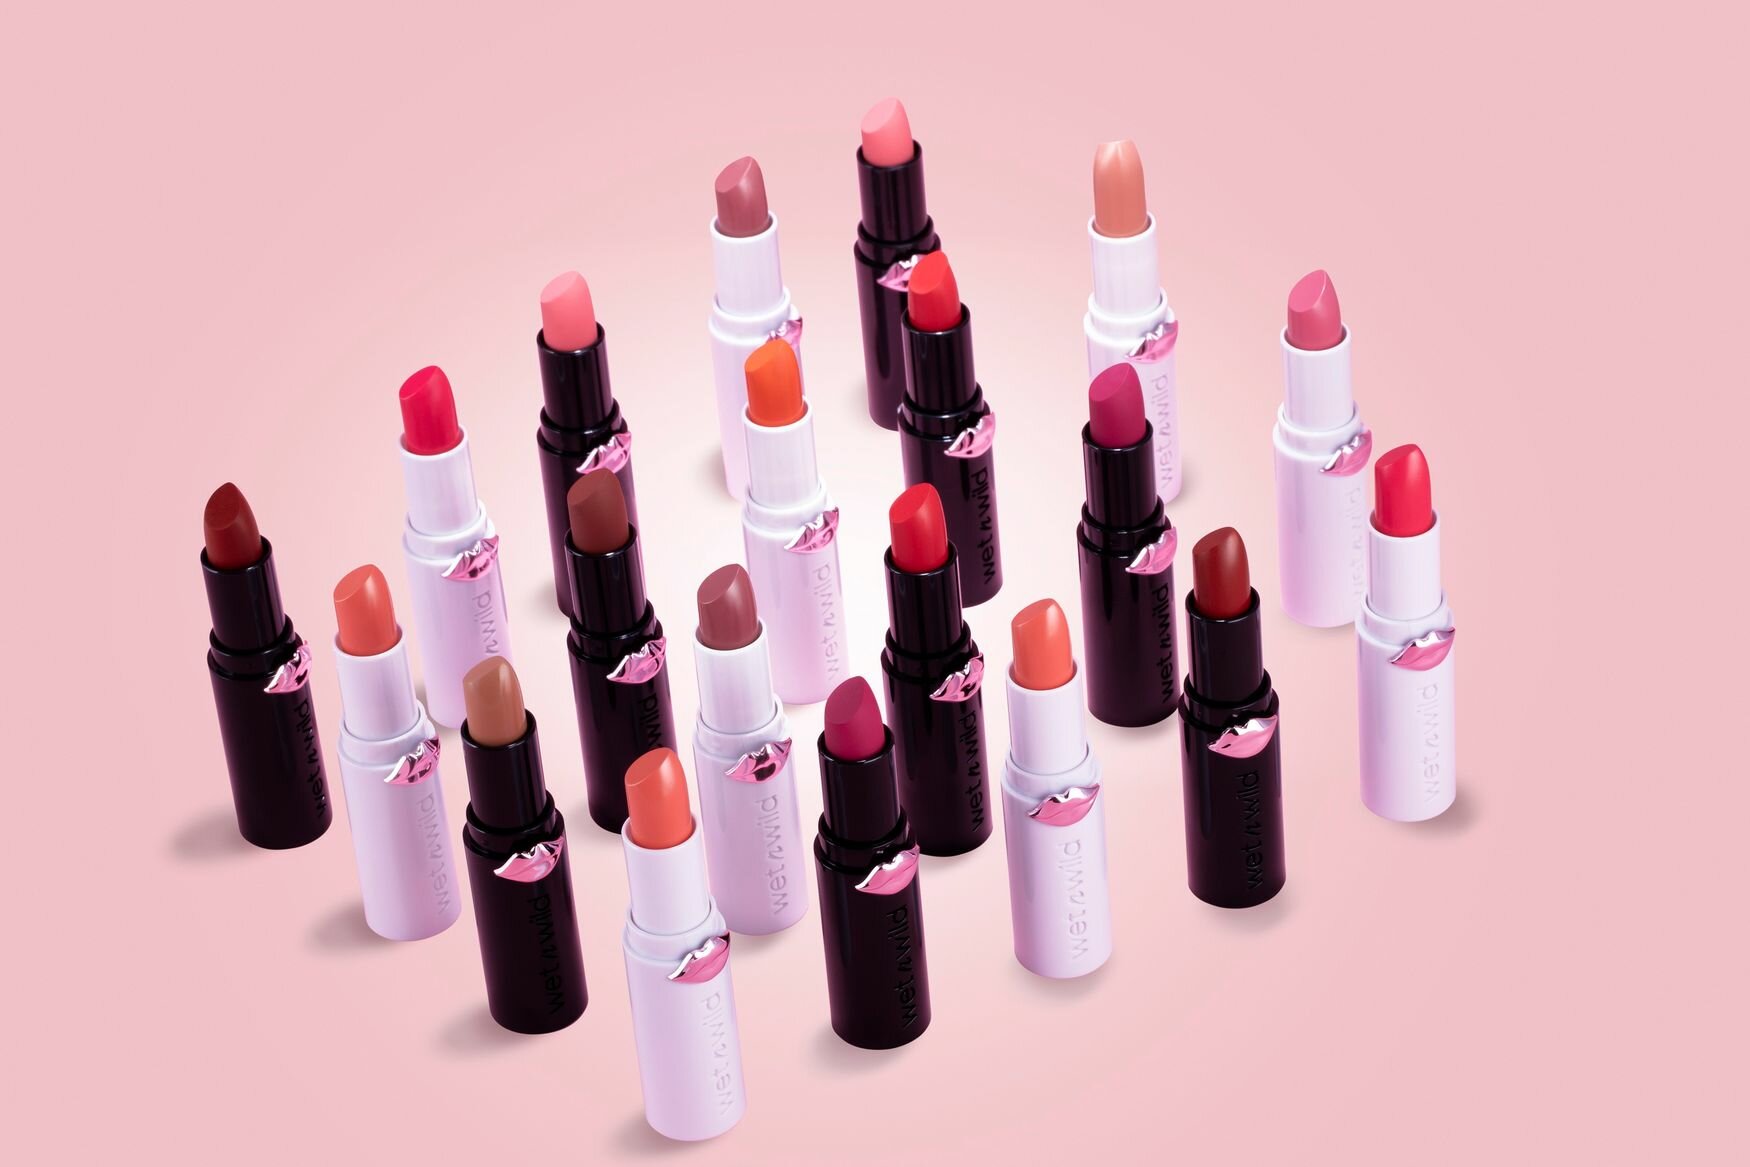 Wet n Wild Помада Для Губ MegaLast Lipstick Товар 1422e mochalicious Markwins Beauty Products CN - фото №10